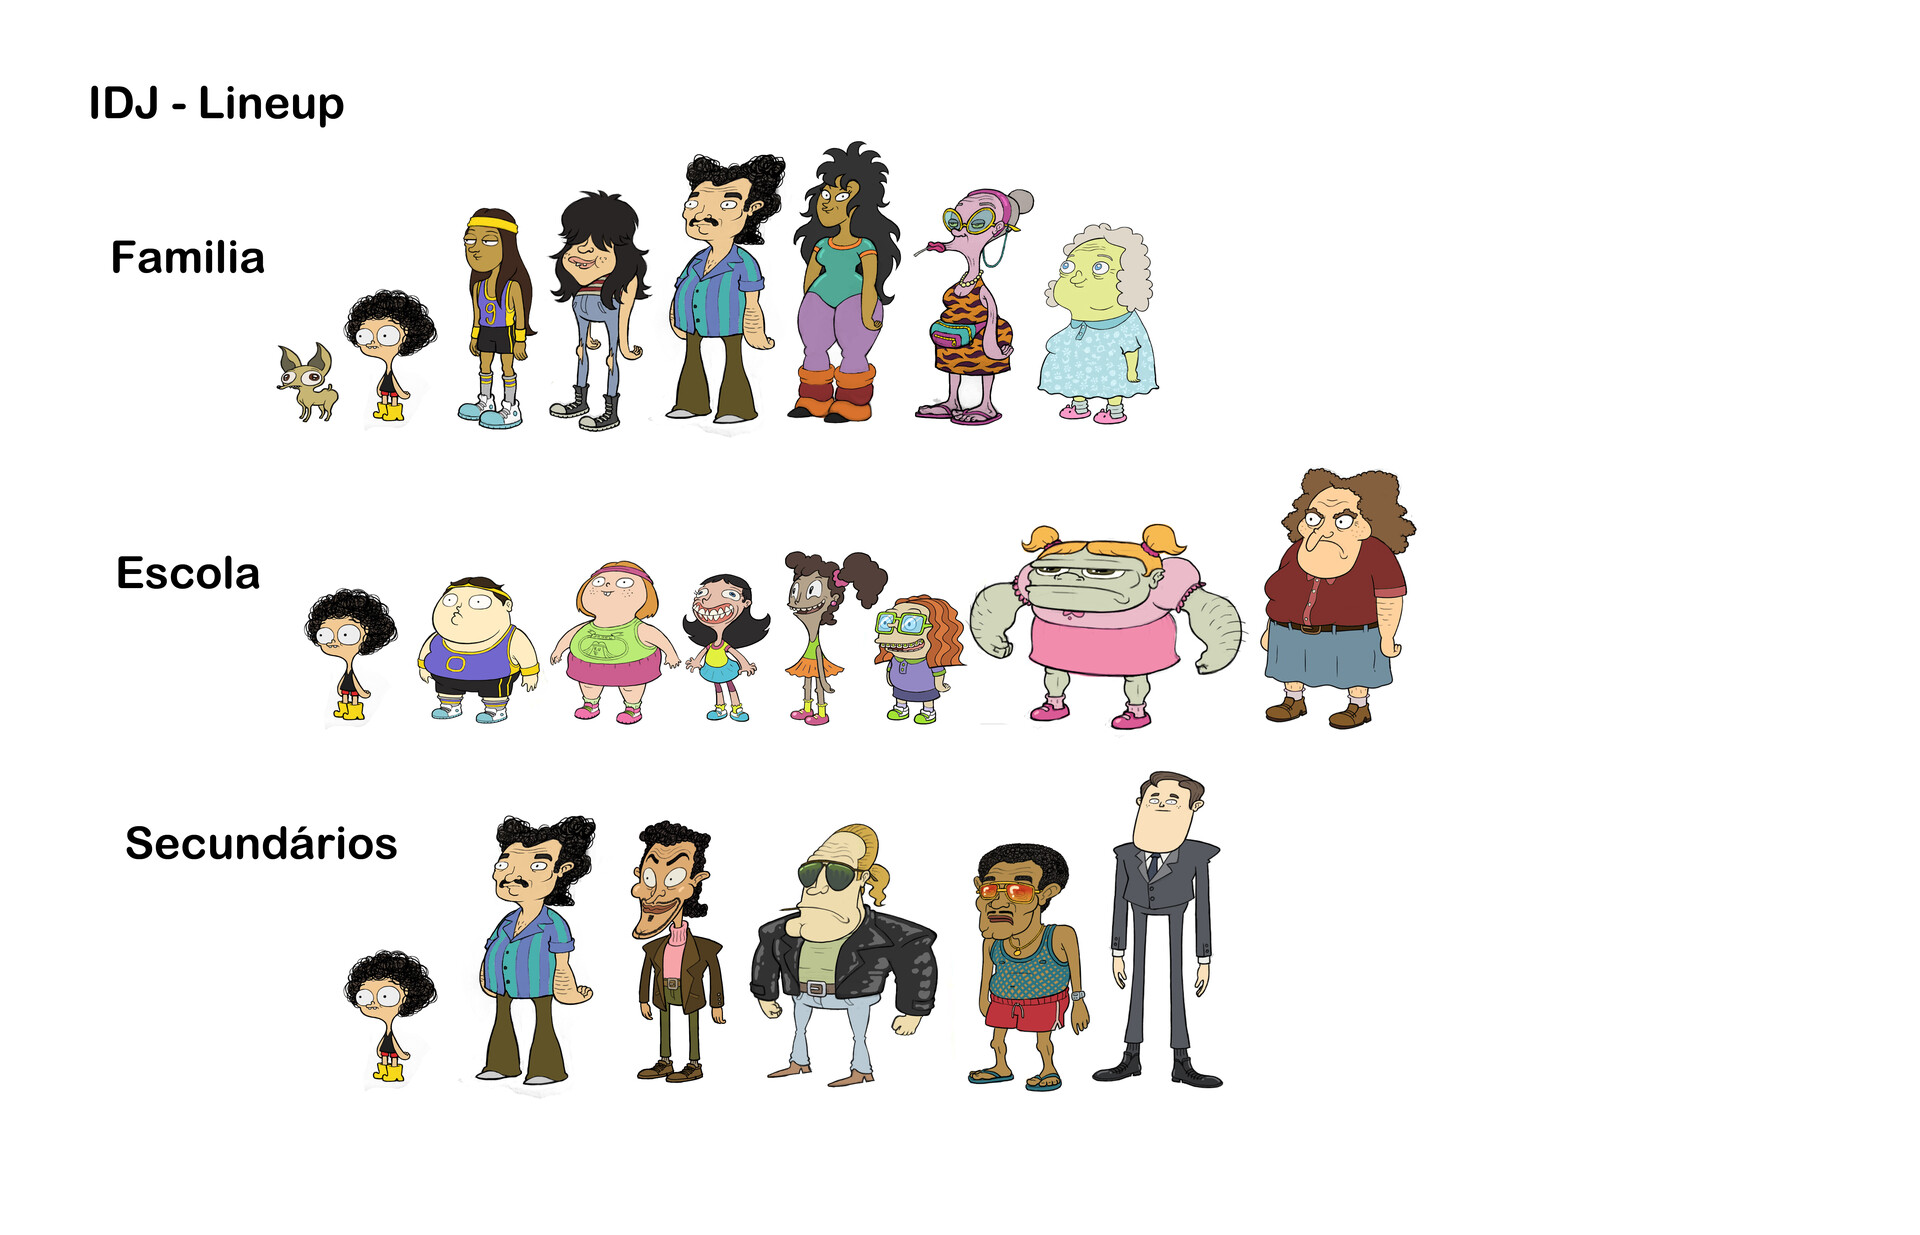 Vini Wolf - Irmão do Jorel ( Jorel's Brother ) - Cartoon Network Animation  Series - Character Design